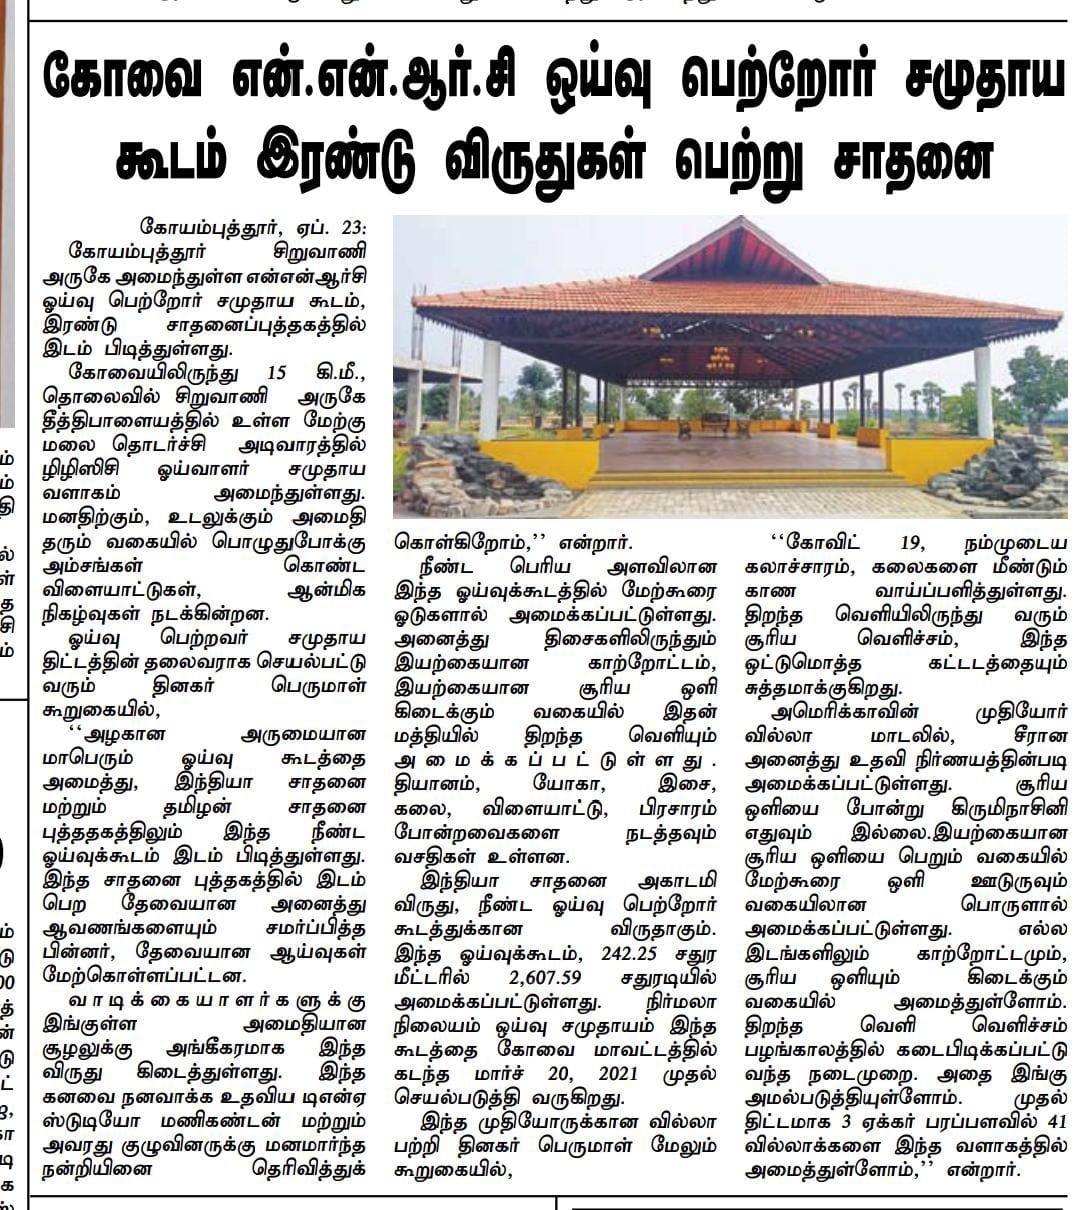 Tamilaka News article about NNRC Gazebo